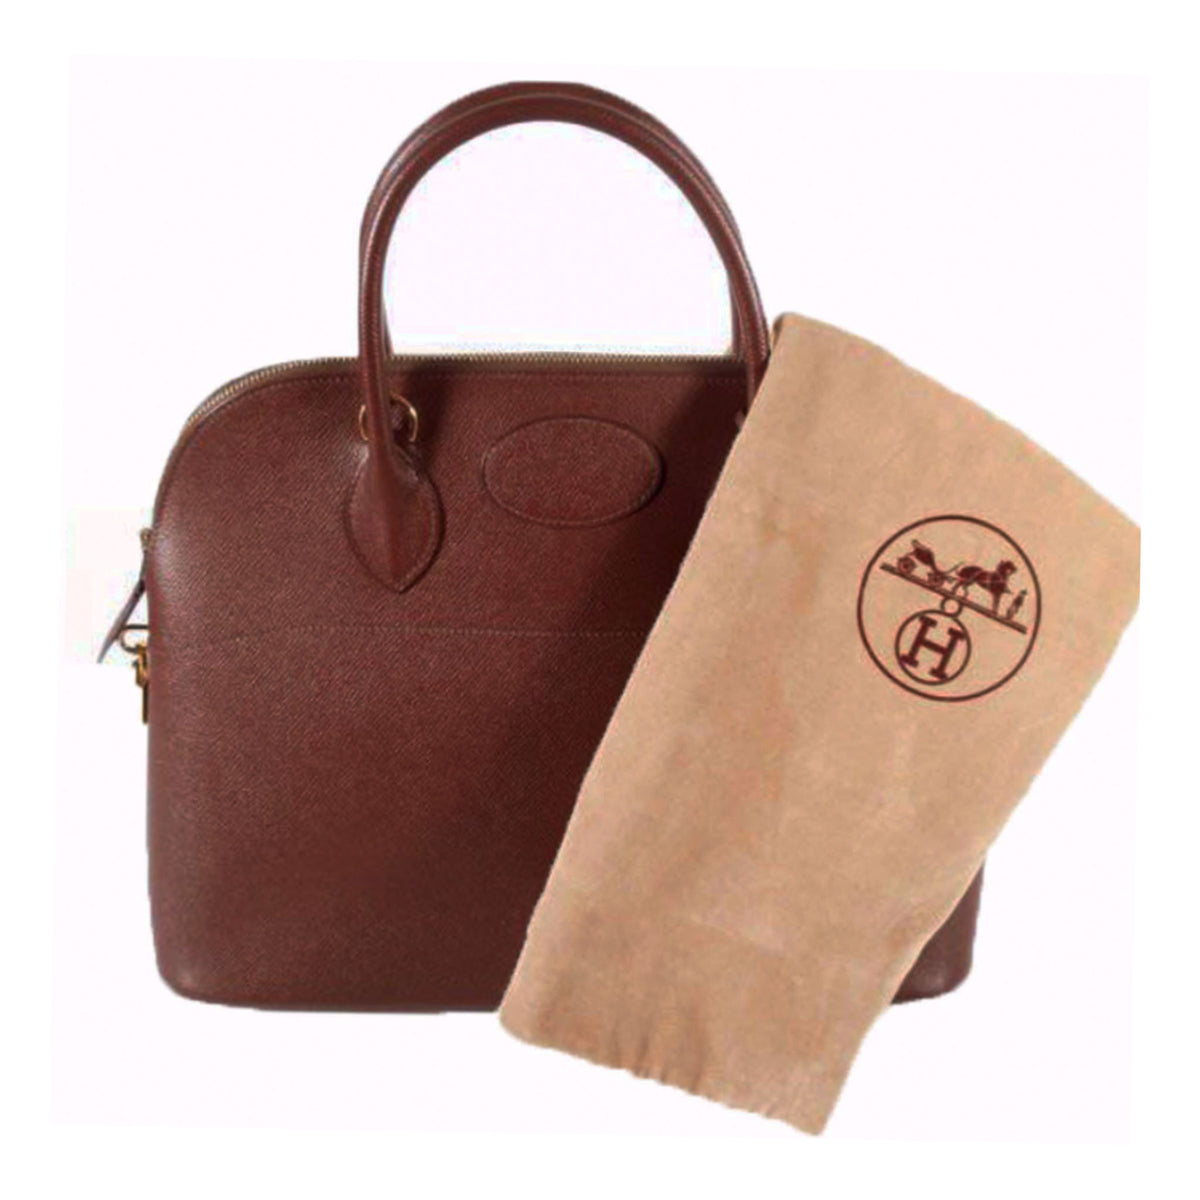 Shop Brown Black Snake Skin Style Leather Birkin Tote Handbag